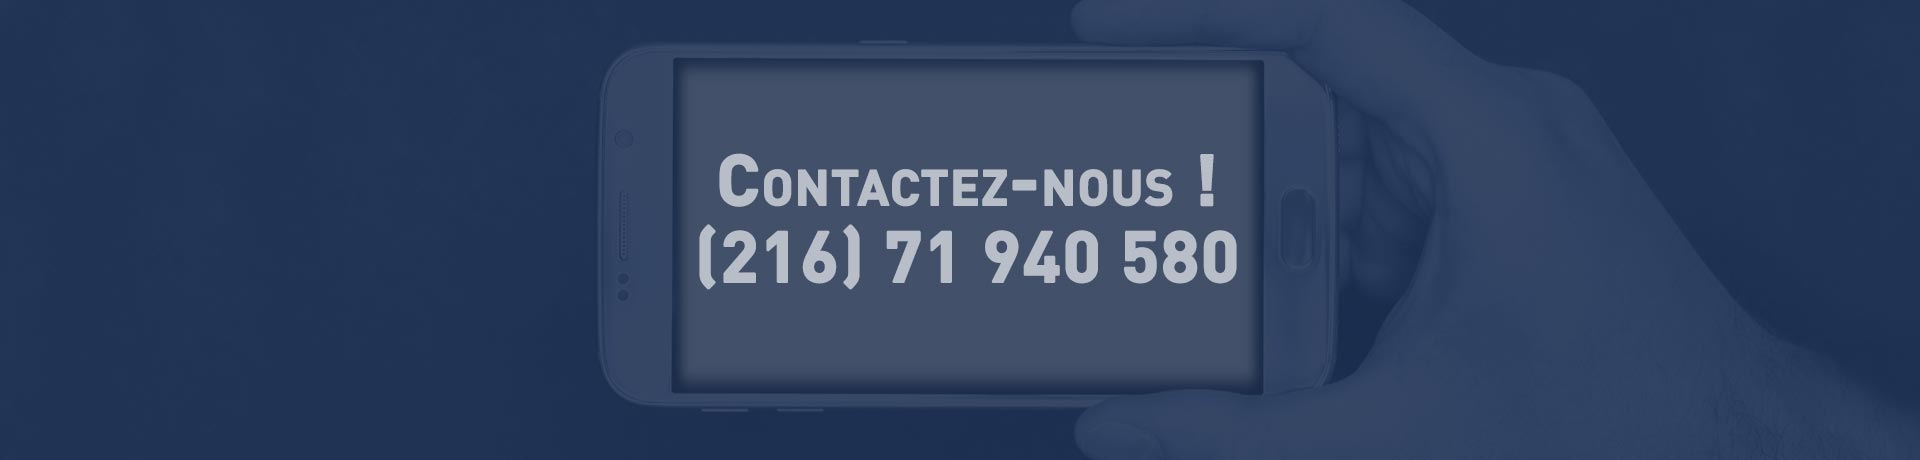 call (216) 71 940 580